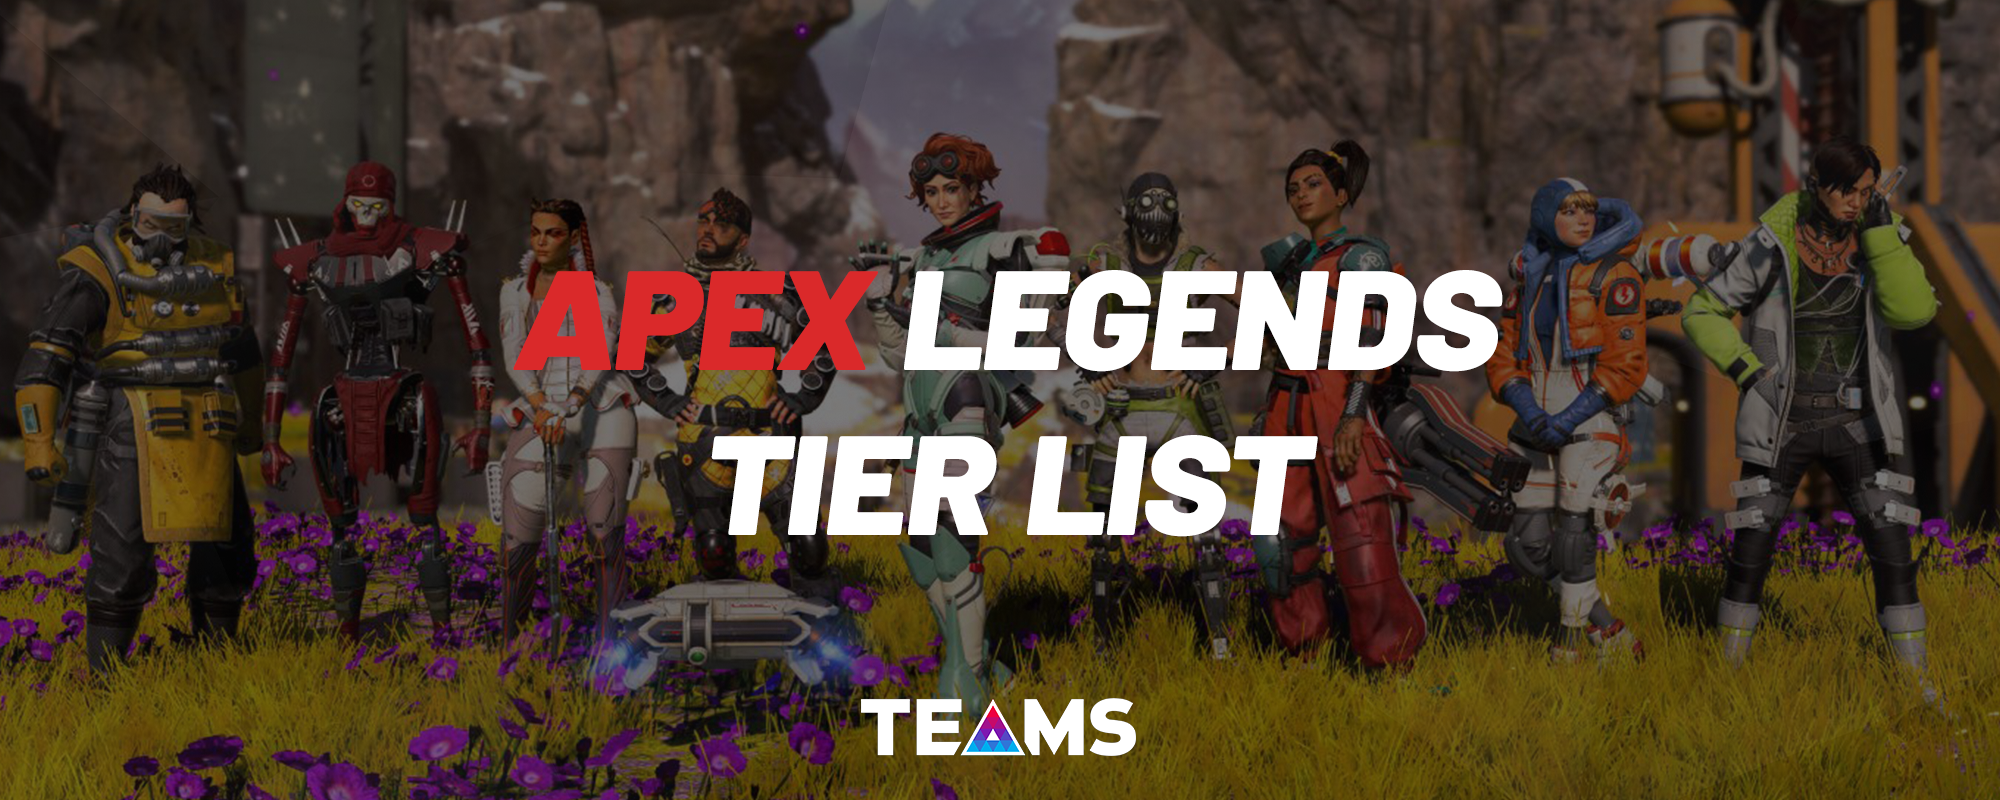 Best League of Legends Tier List Maker to Use